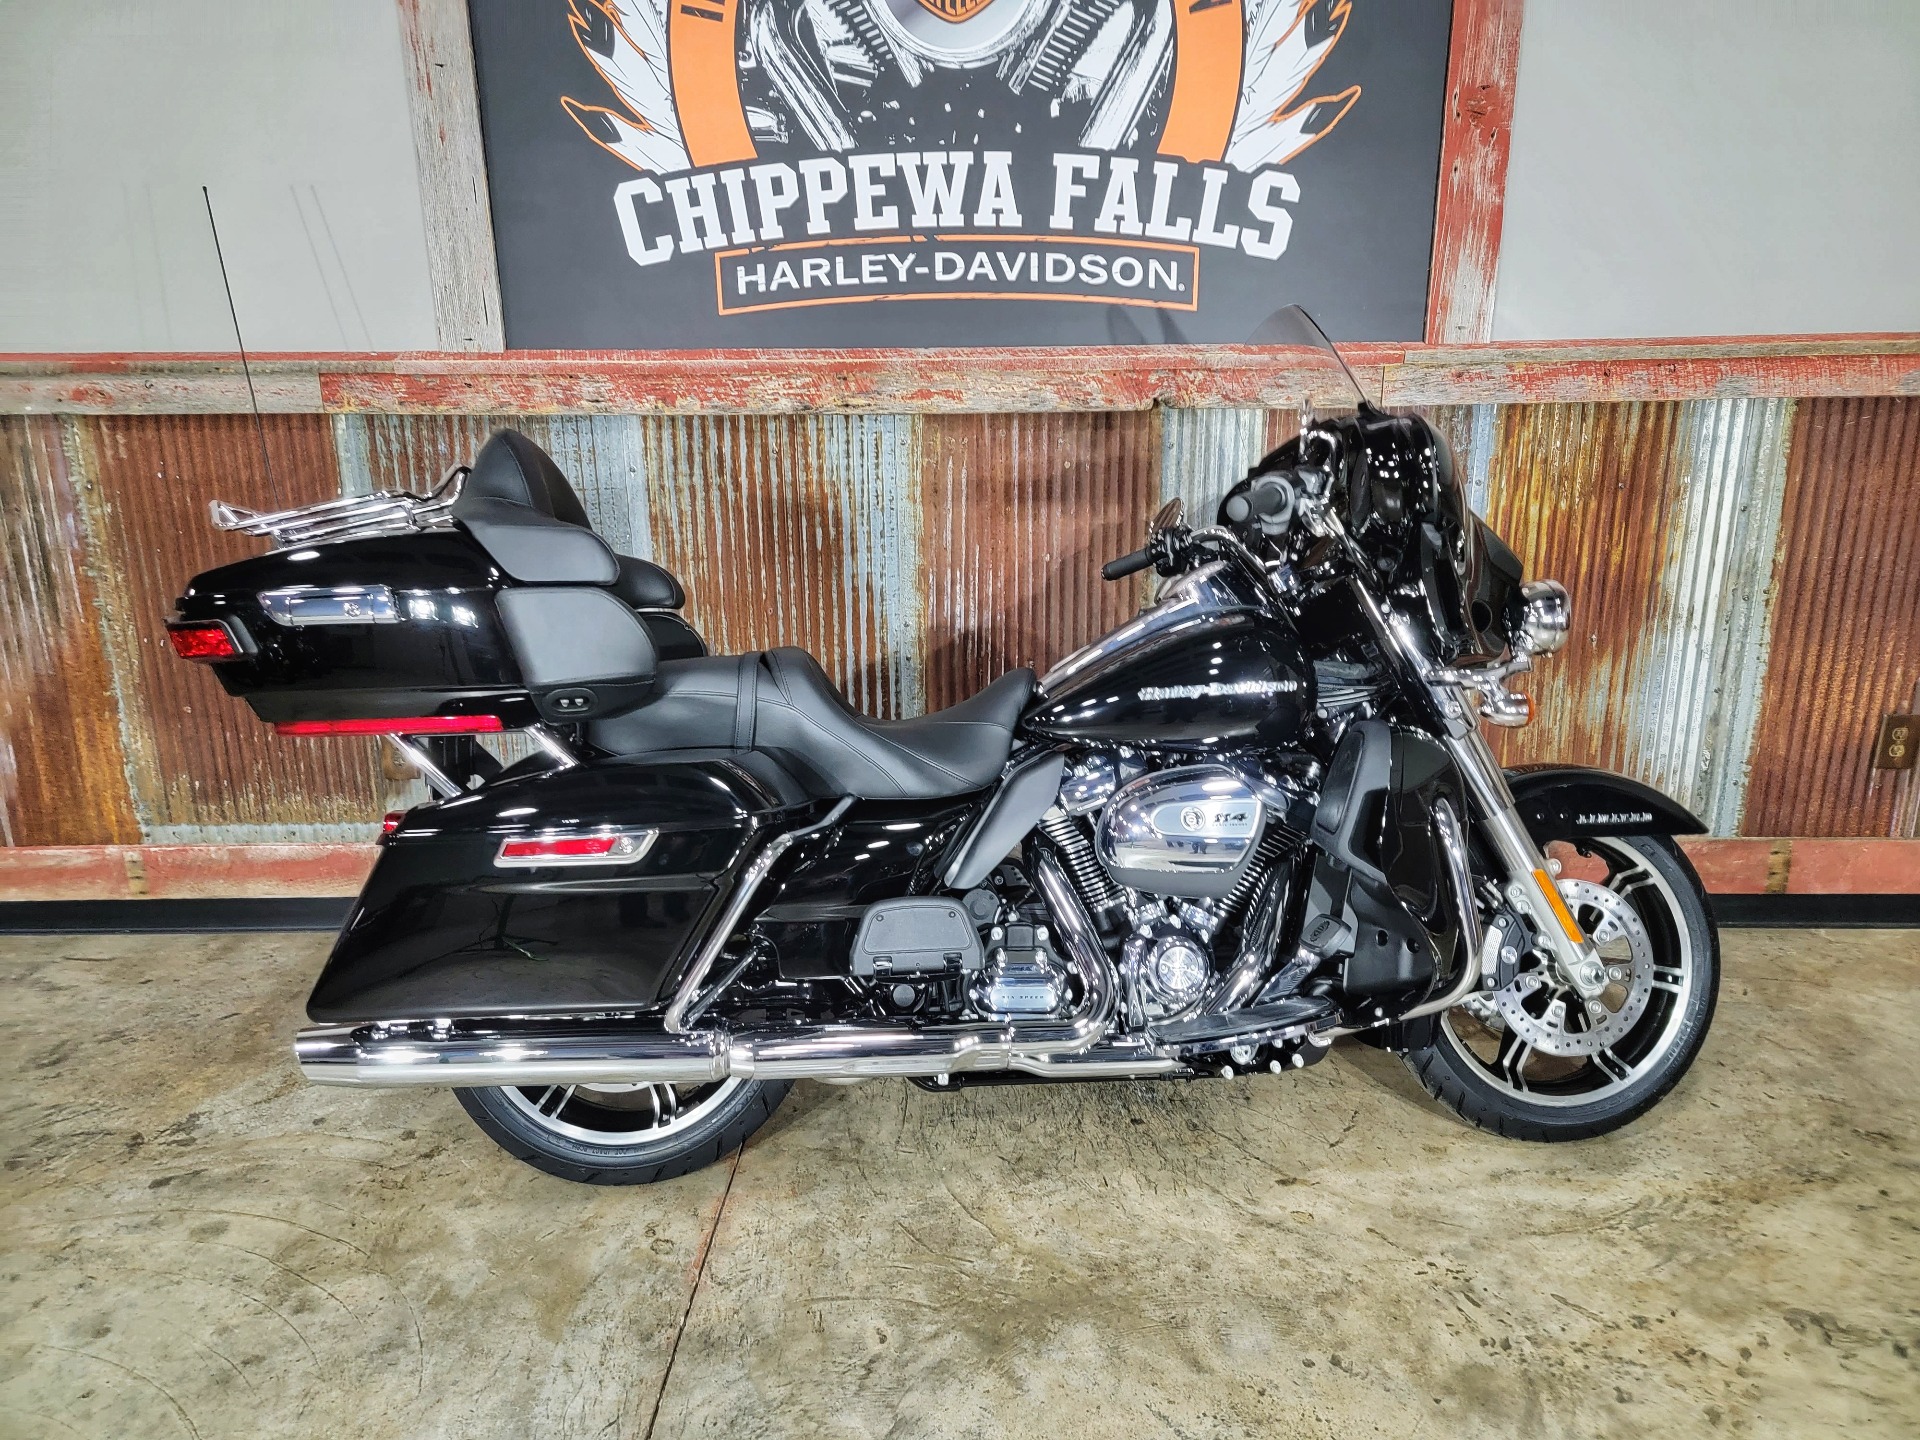 New 2021 Harley Davidson Ultra Limited Vivid Black Chrome Option Motorcycles In Chippewa Falls Wi Fl624241